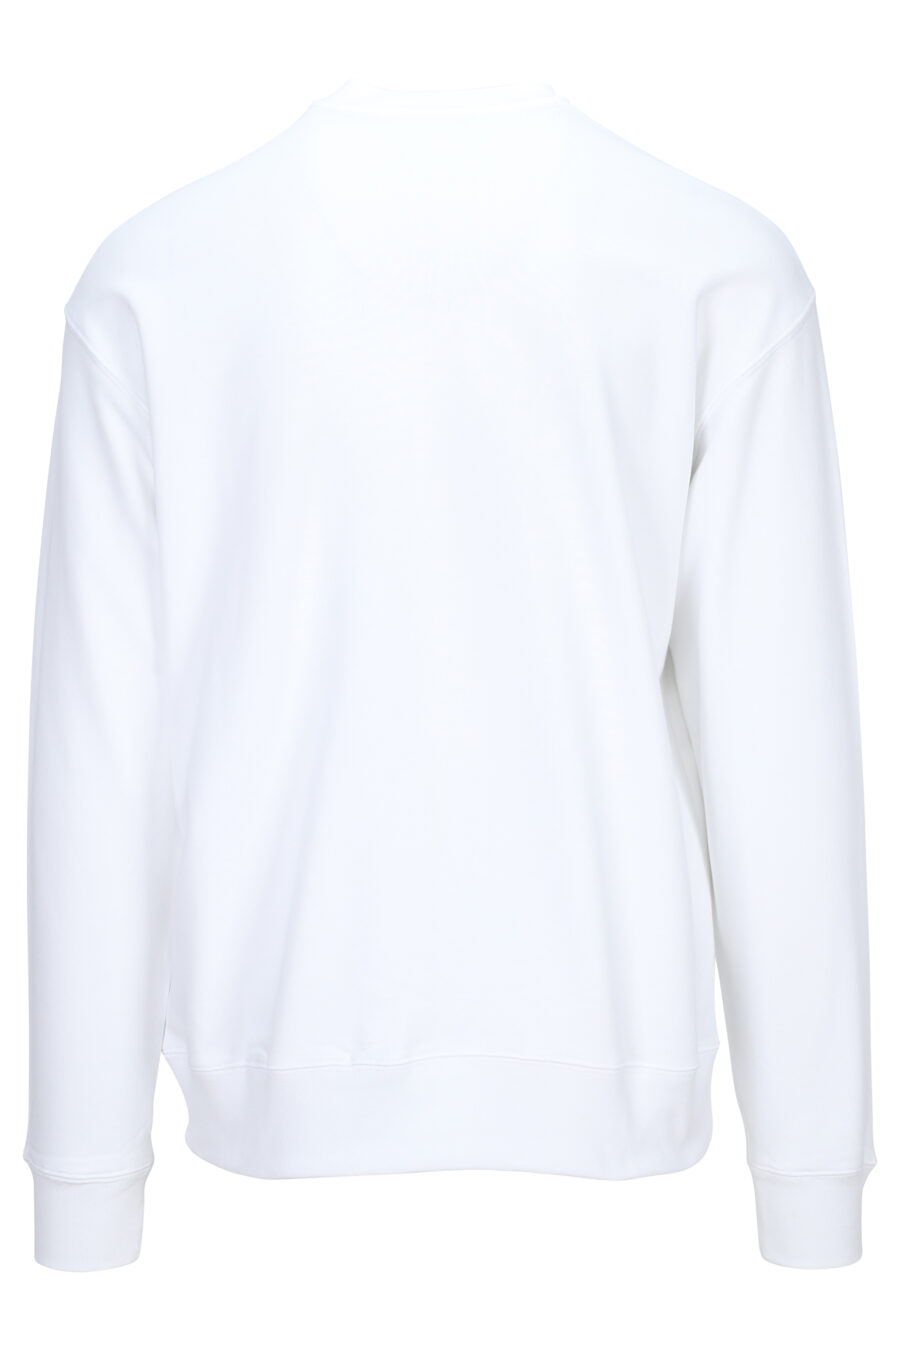 White sweatshirt in organic cotton with black maxilogue "teddy" - 889316853452 1